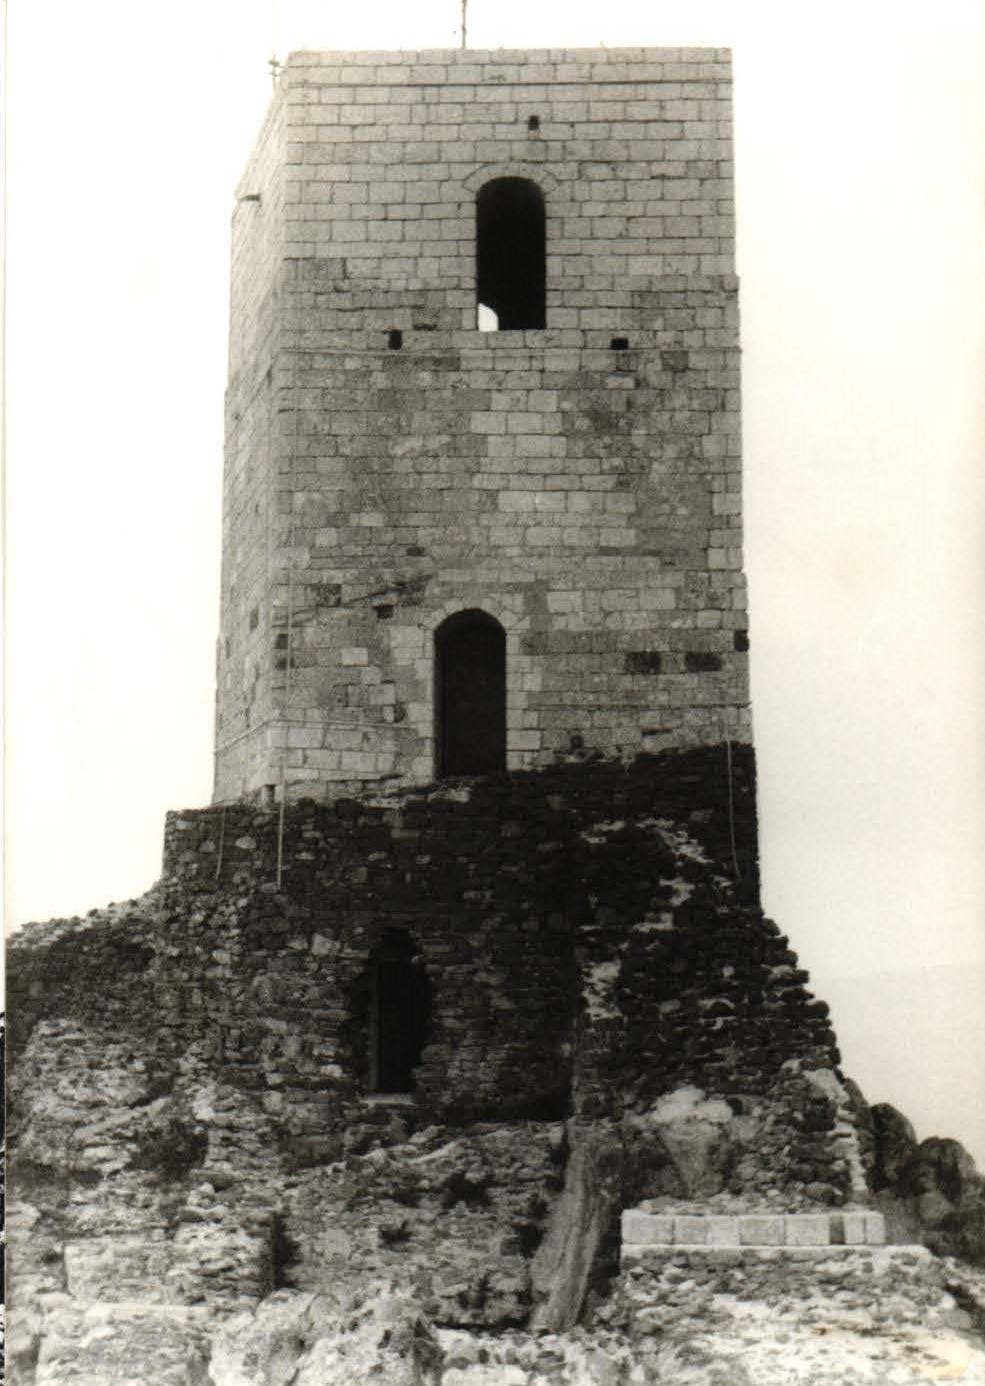 Castello Malaspina (castello, medievale, difensivo) - Osilo (SS)  (XIII; XIV, inizio; XIV; XIV; XIV; XIV; XIV; XV; XV; XIX)